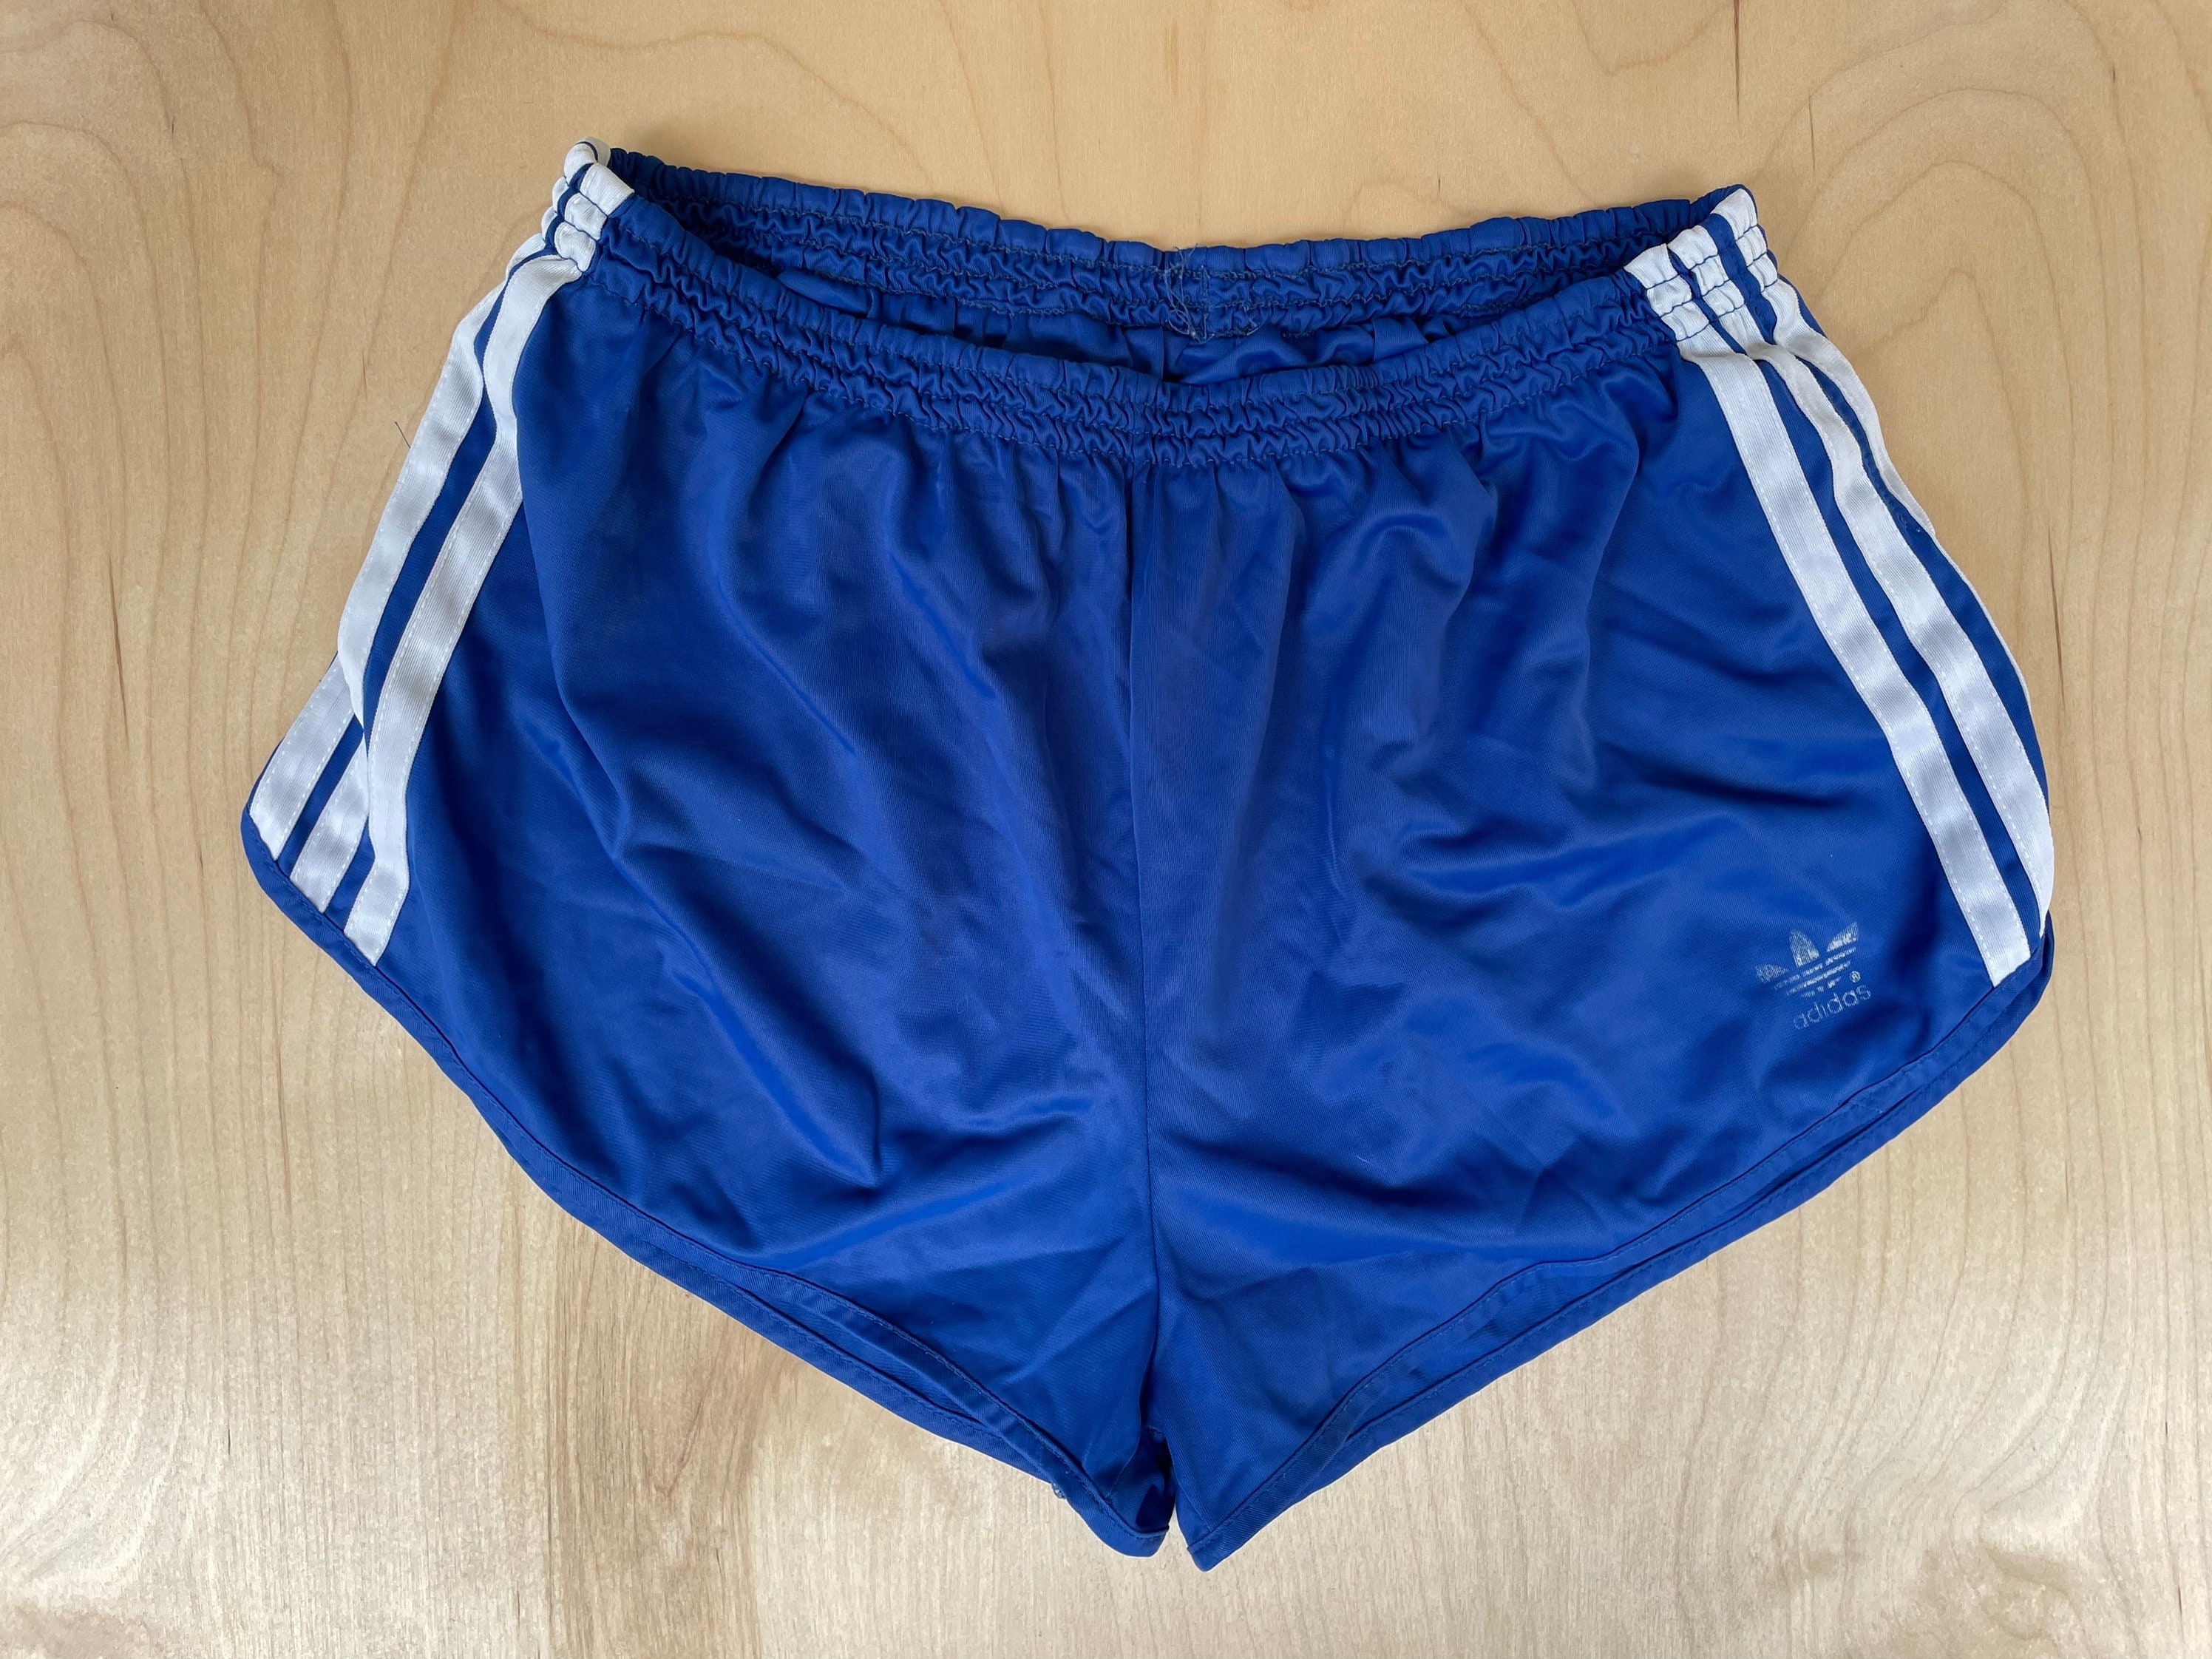 Adidas sprinter shorts